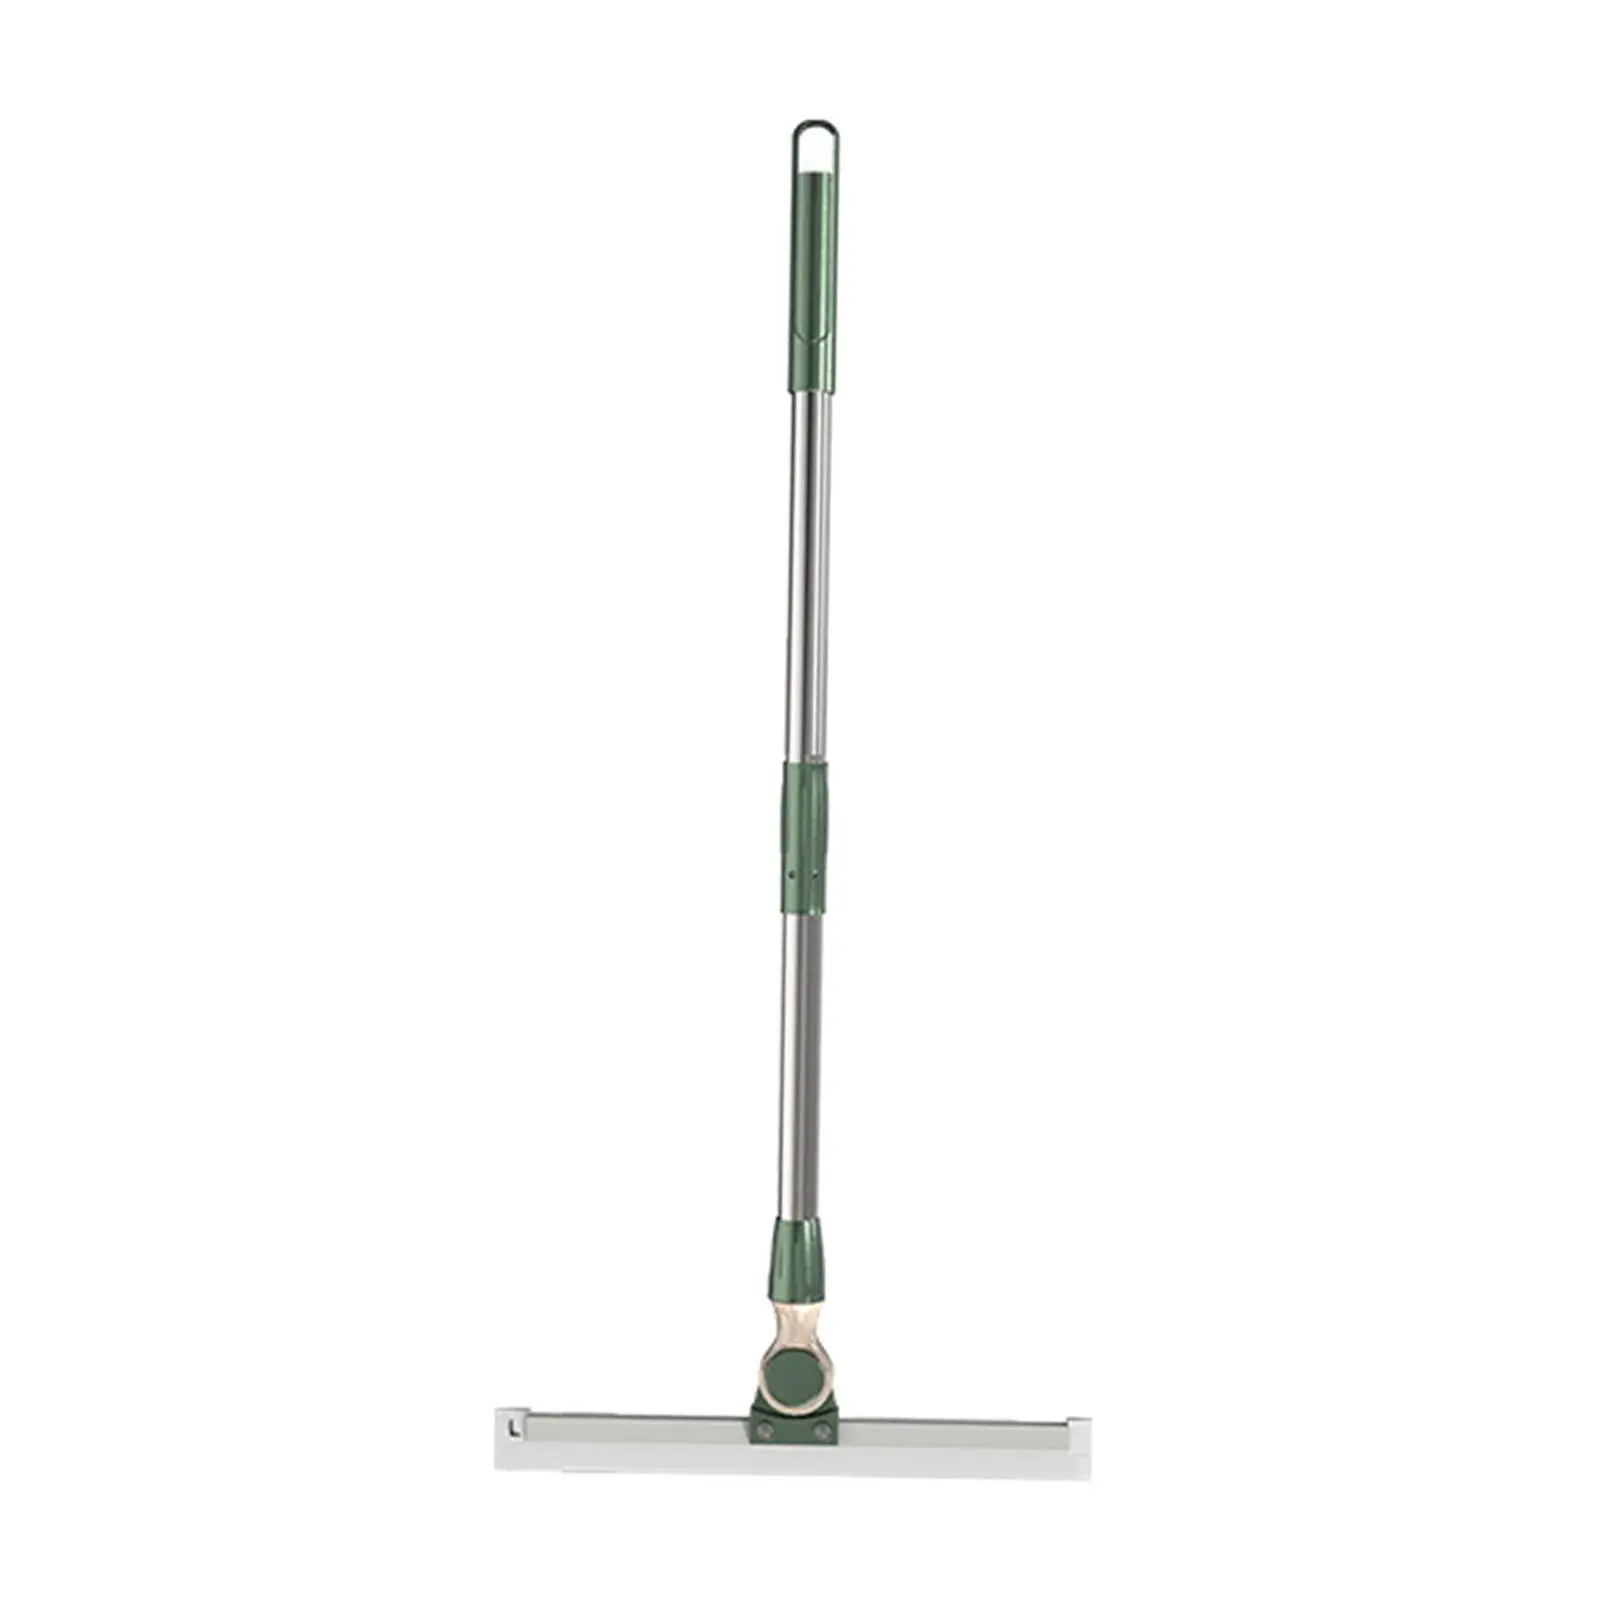 Scraping Sweeper for Bathroom, Window Squeegee, Comfortable Grip, Nonstick